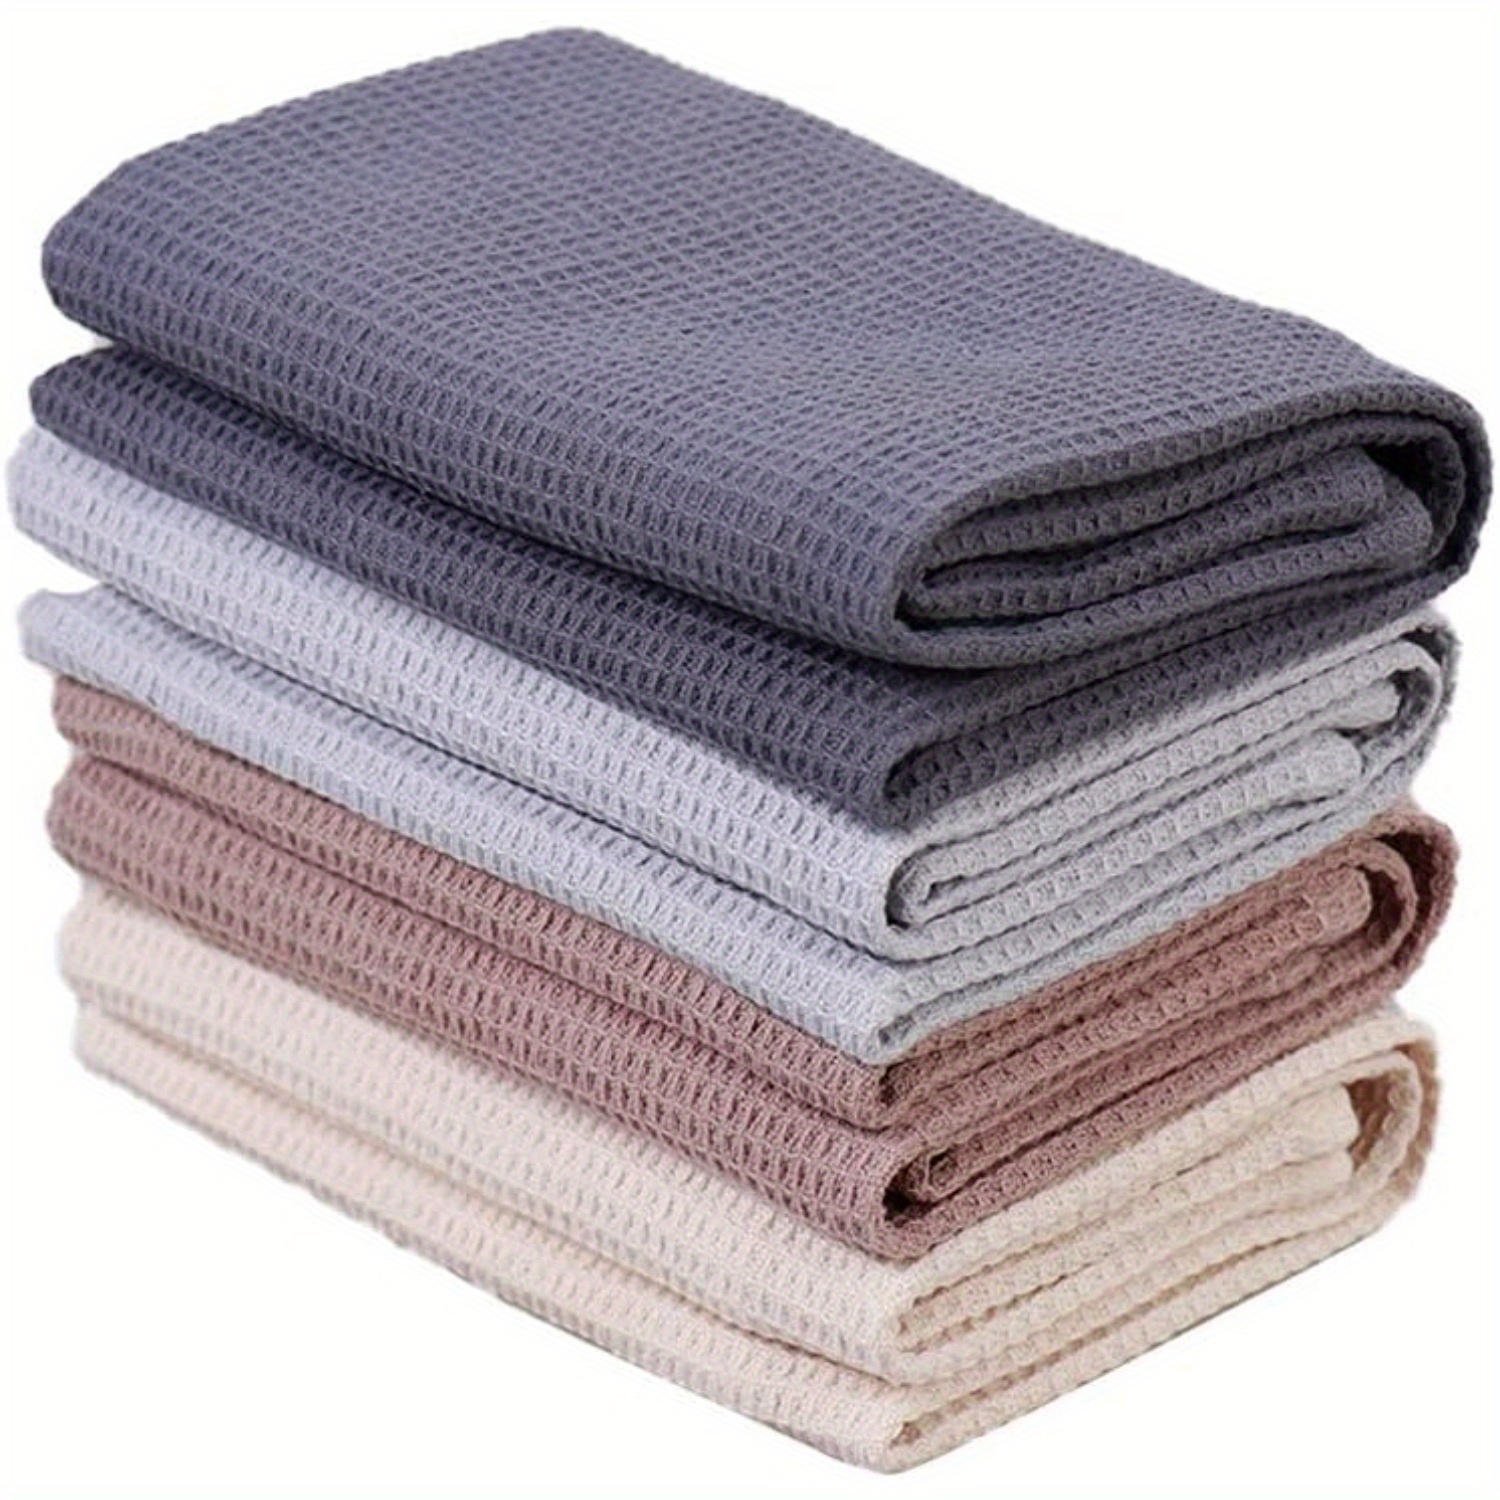 

Dish Towel Set, Bath Towel Set, 100% Cotton Waffle Weave Kitchen Towels 4 Pieces, Super Absorbent (17 X 25 Inches, Set Of 4)